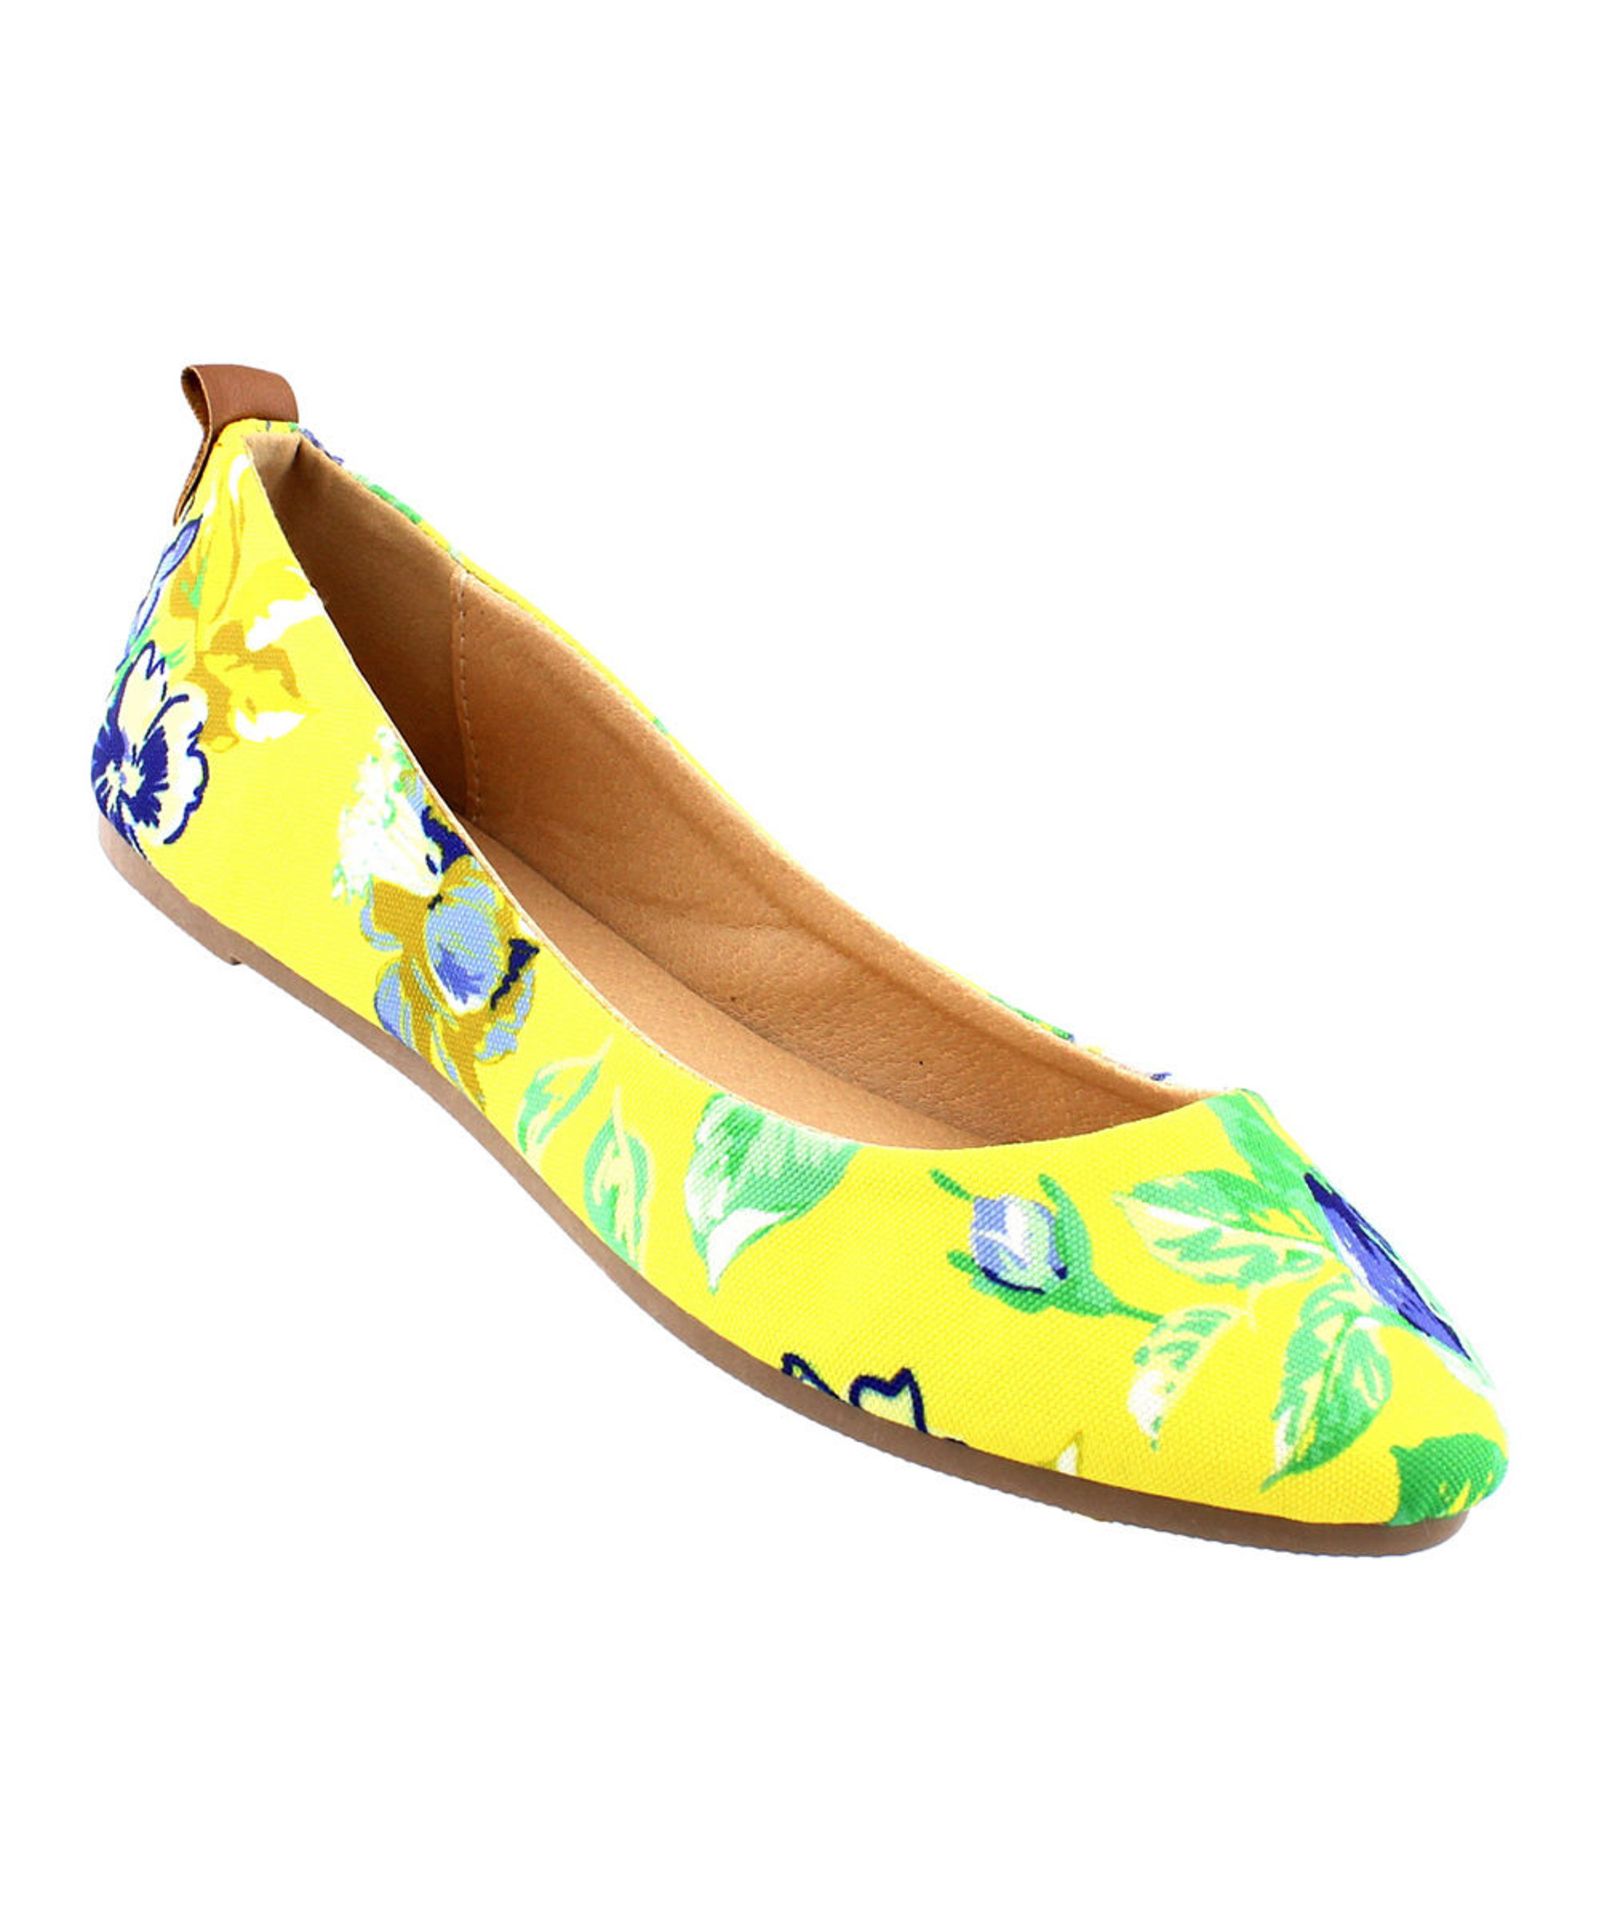 Liliana Footwear Yellow Floral Pandora Flat (Uk Size 9:Us Size 11) (New with box) [Ref: 35124538-J-